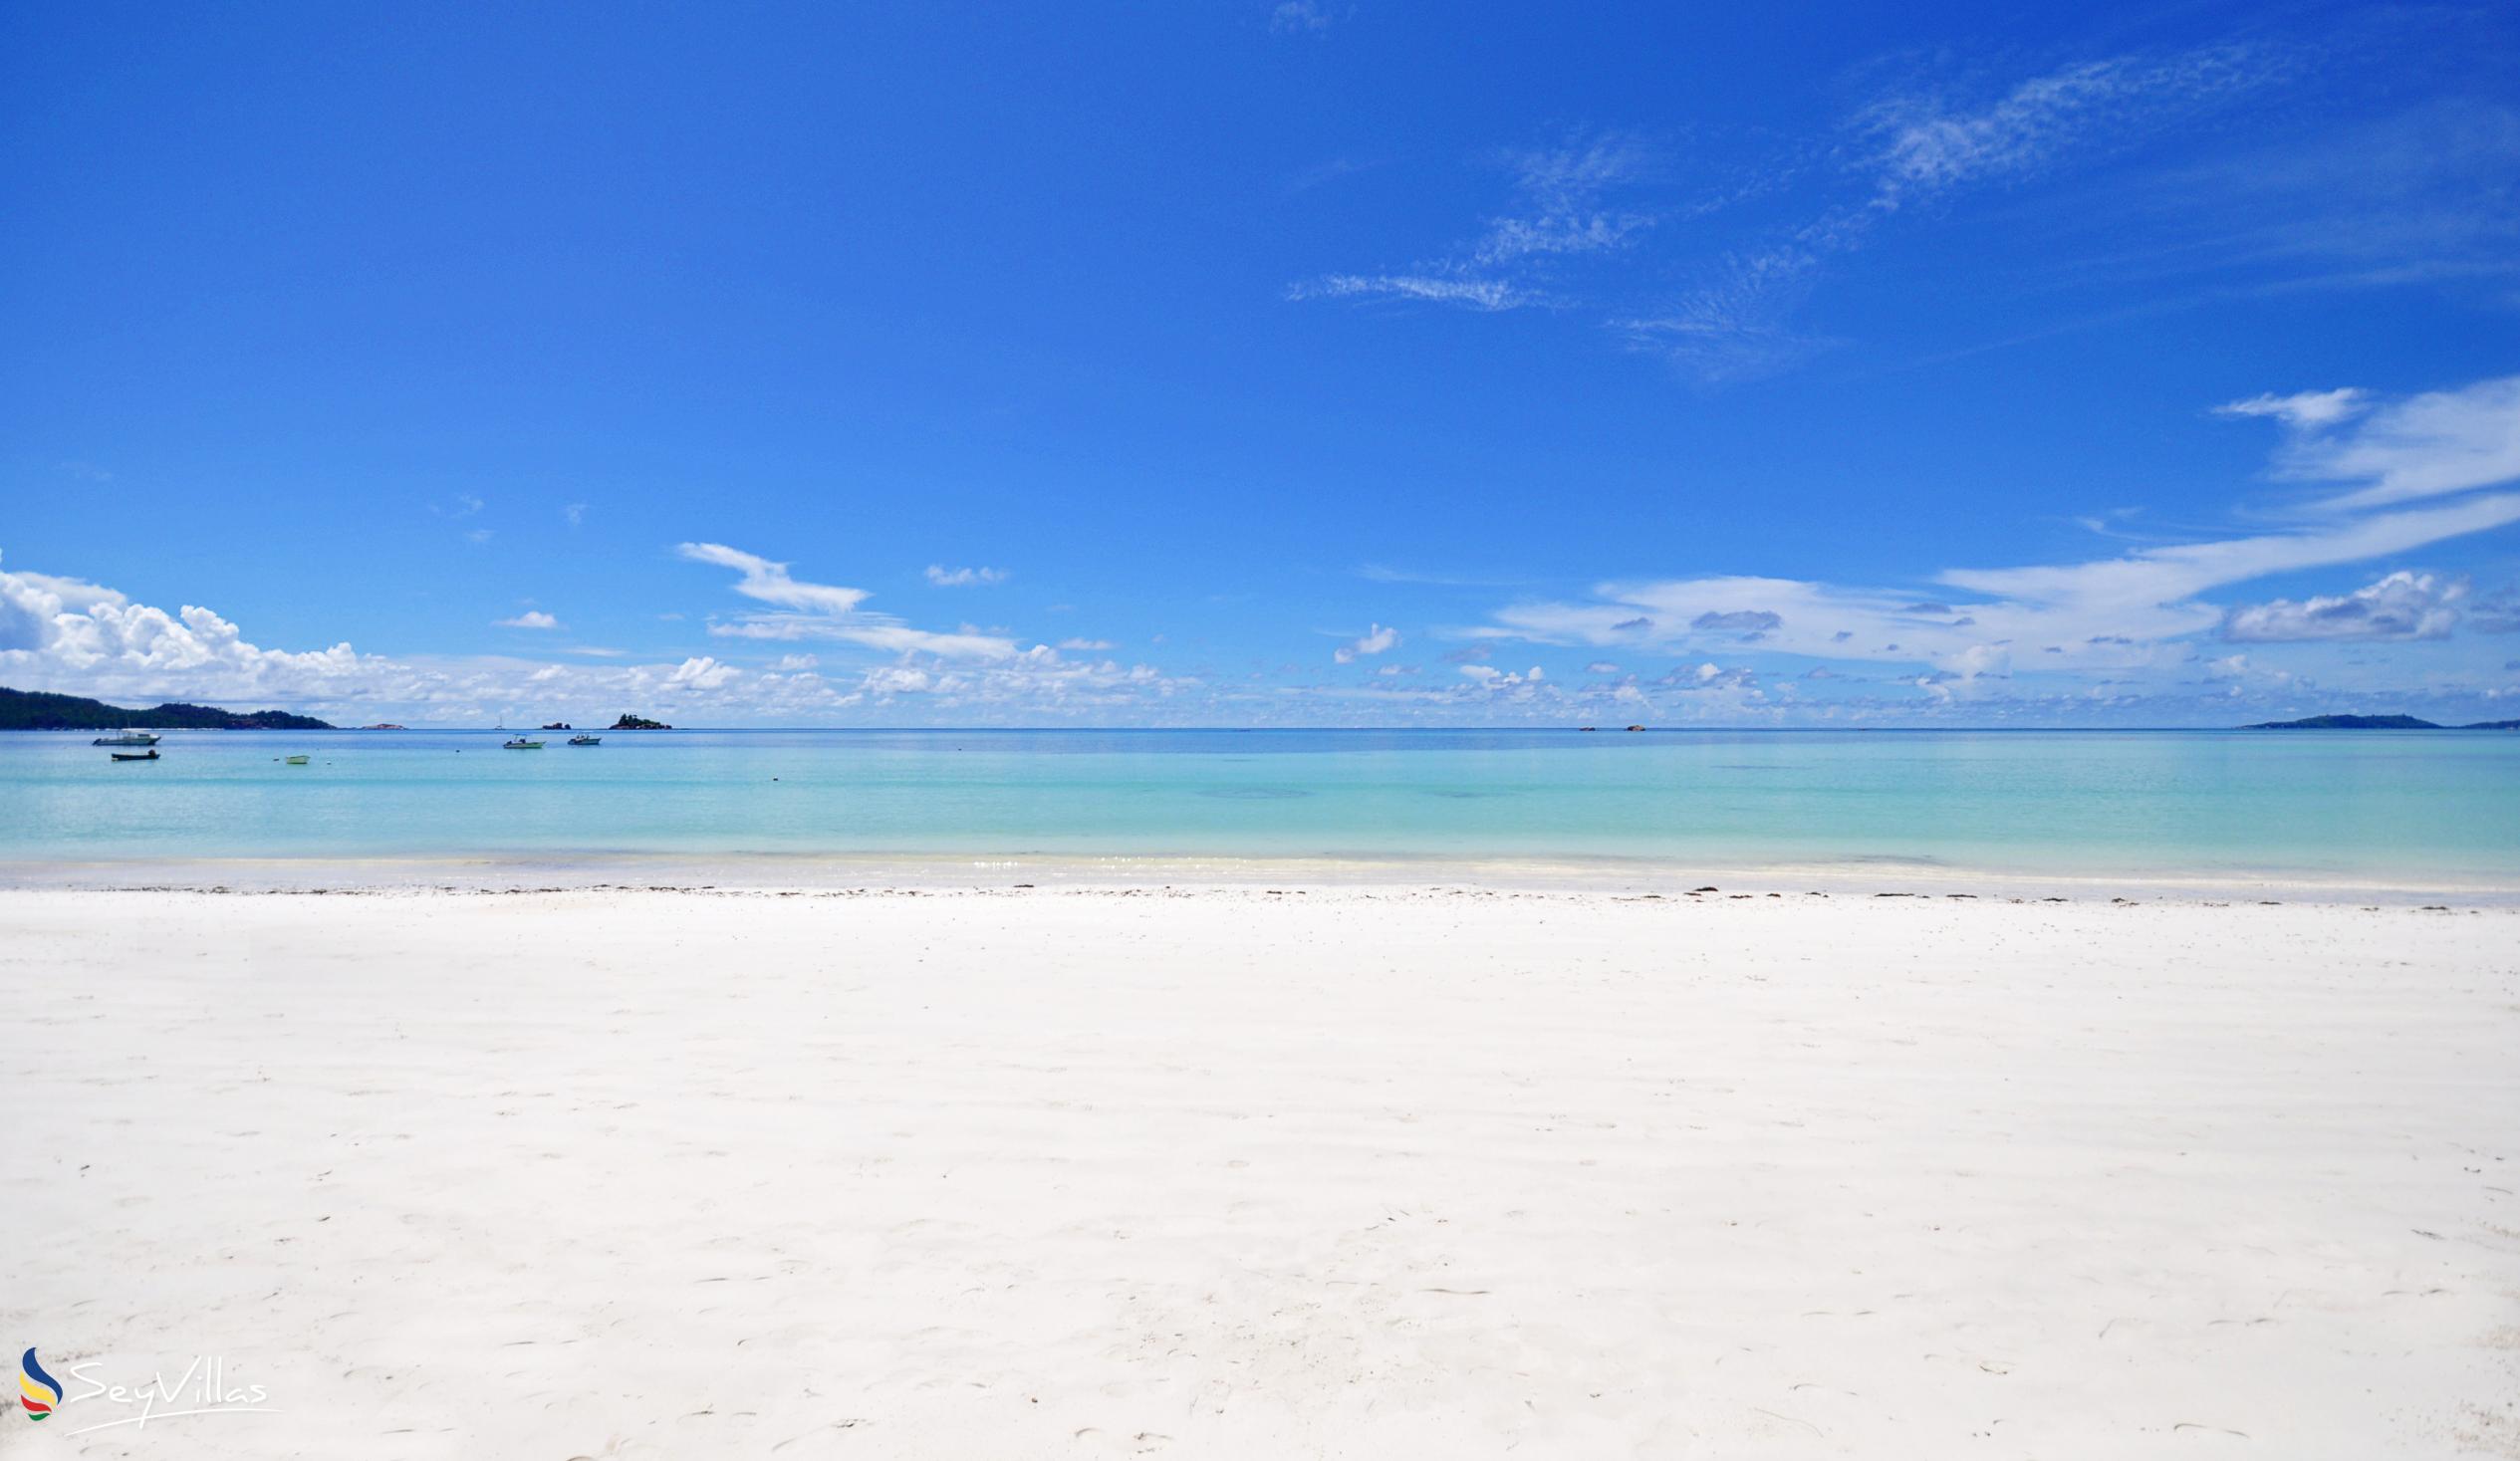 Photo 77: Cote d'Or Footprints - Beaches - Praslin (Seychelles)